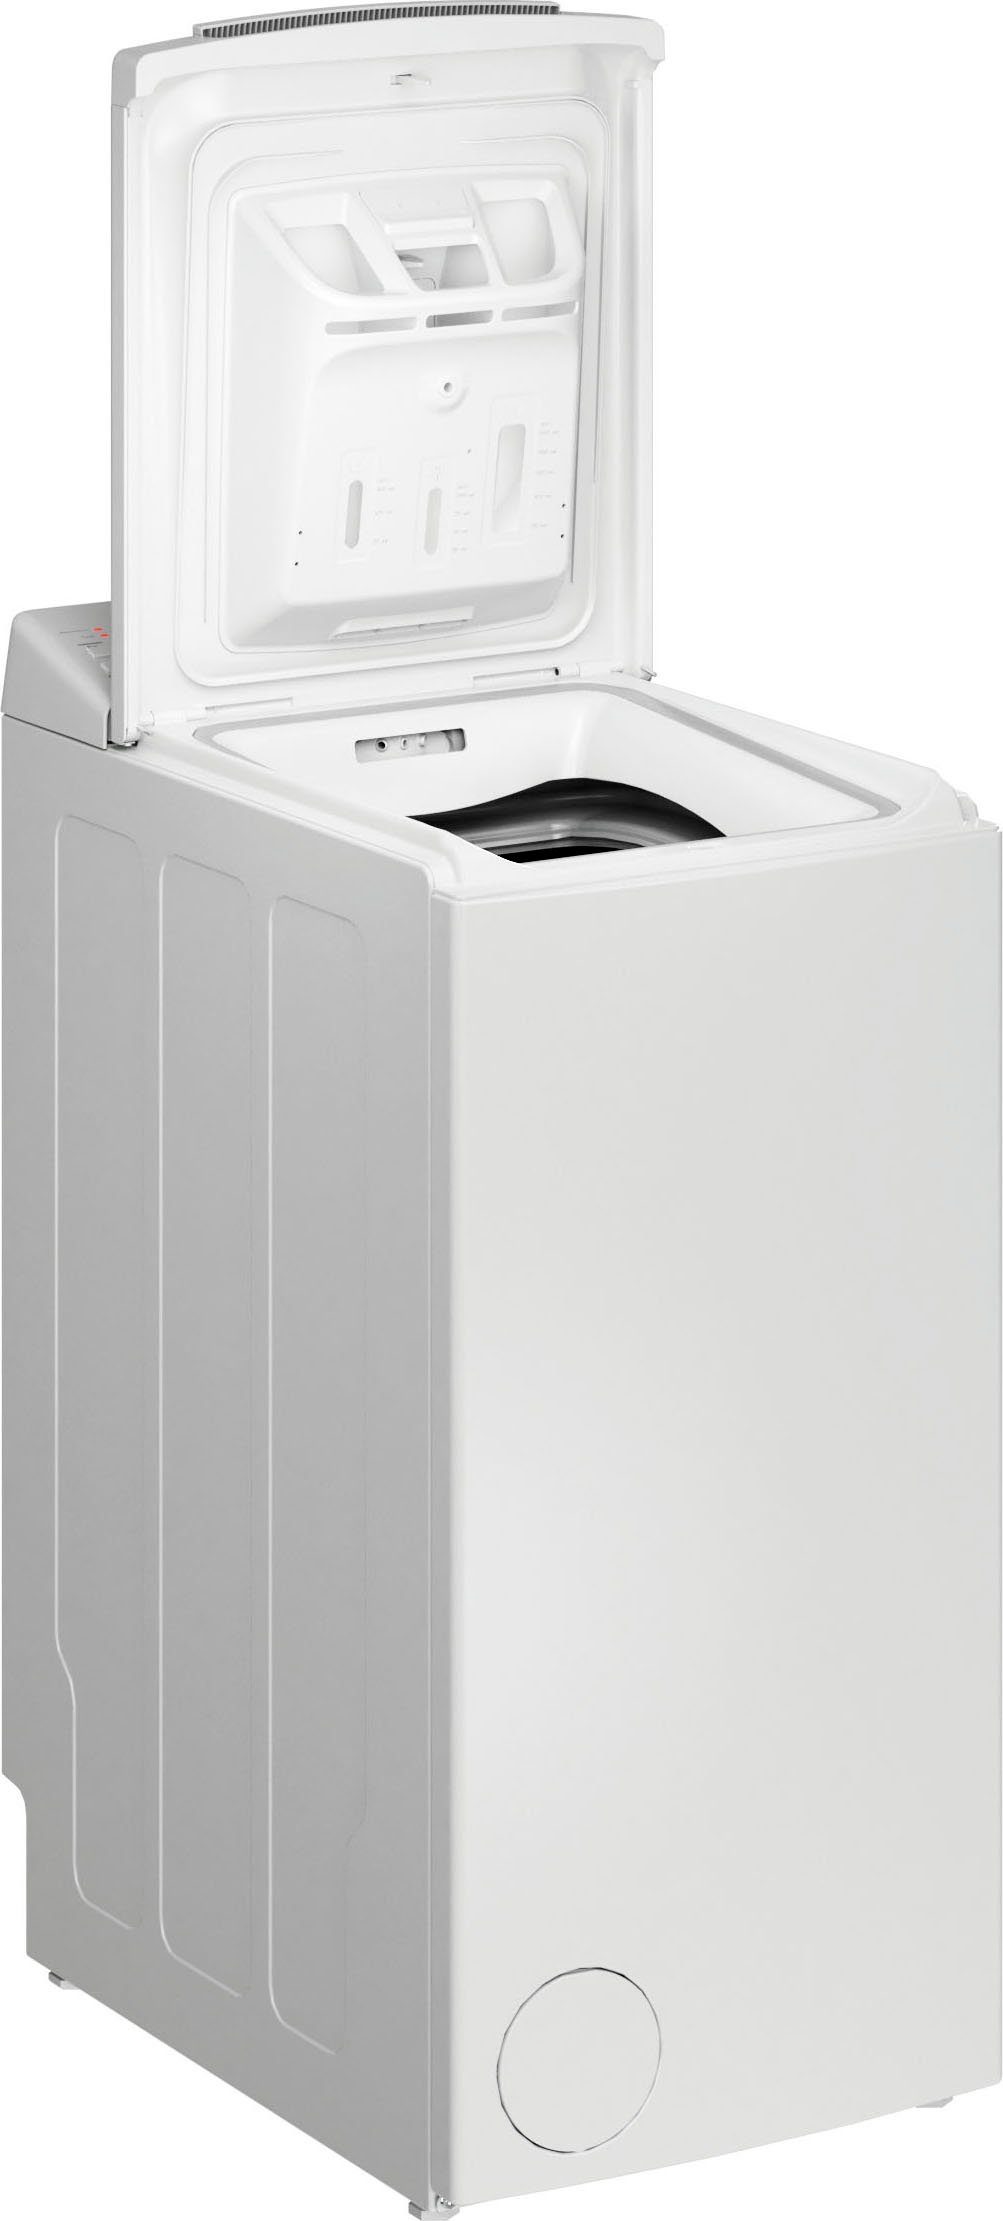 BAUKNECHT Eco 1200 Smart 6 Waschmaschine Toplader 12C, WAT kg, U/min